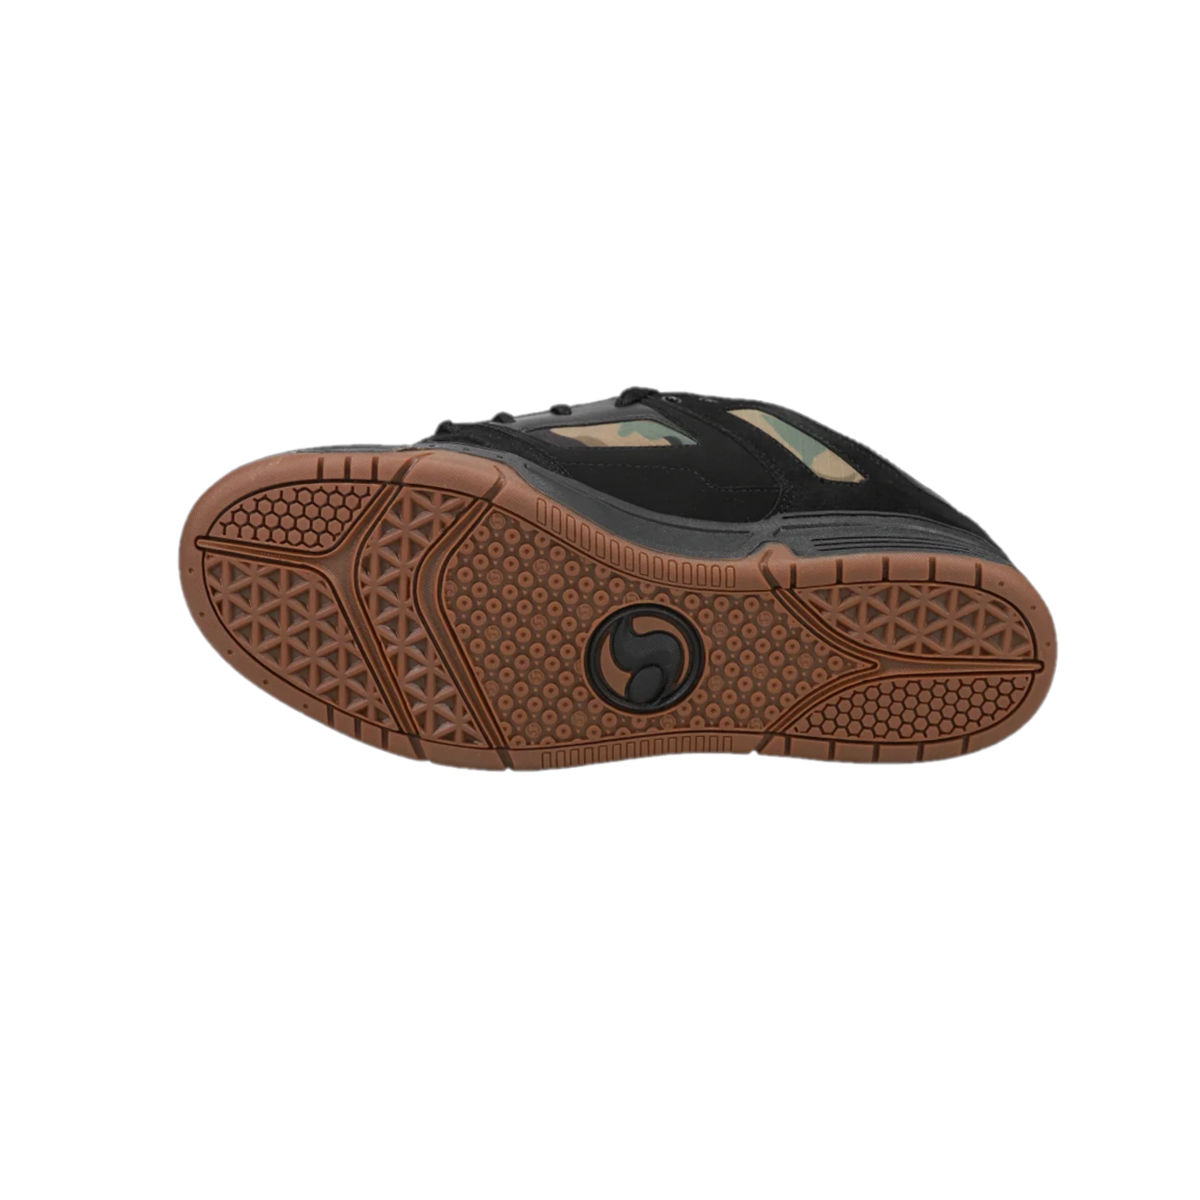 DVS F0000329005 GAMBOL MN'S (Medium) Black/Camo/Orange Leather & Nubuck Skate Shoes